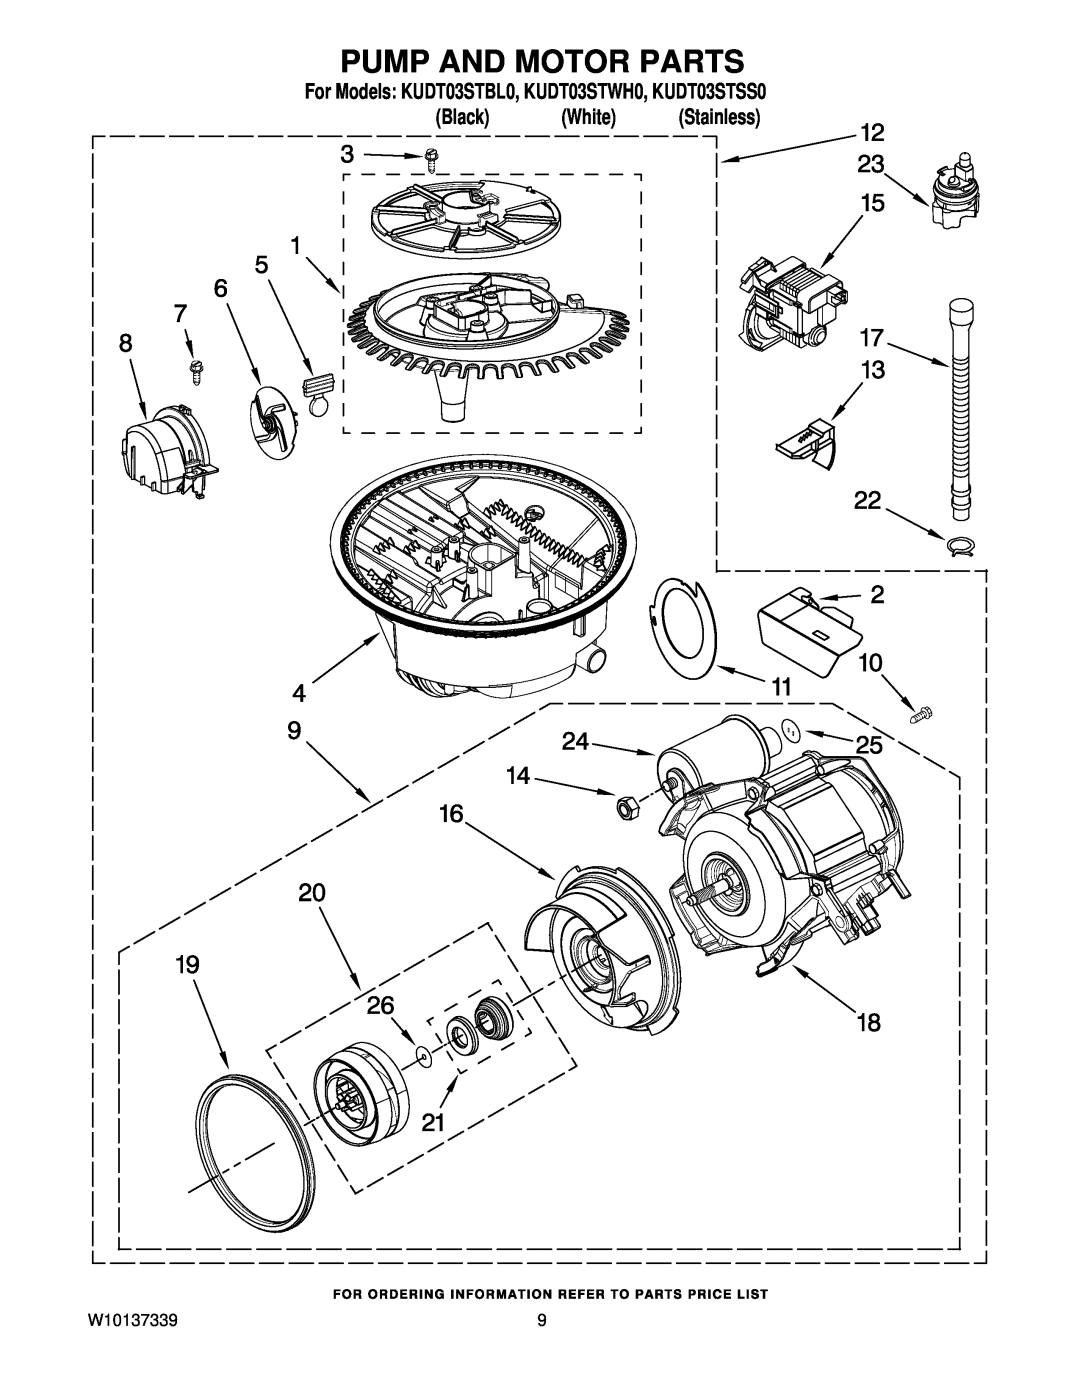 KitchenAid manual Pump And Motor Parts, For Models KUDT03STBL0, KUDT03STWH0, KUDT03STSS0, Black White Stainless 